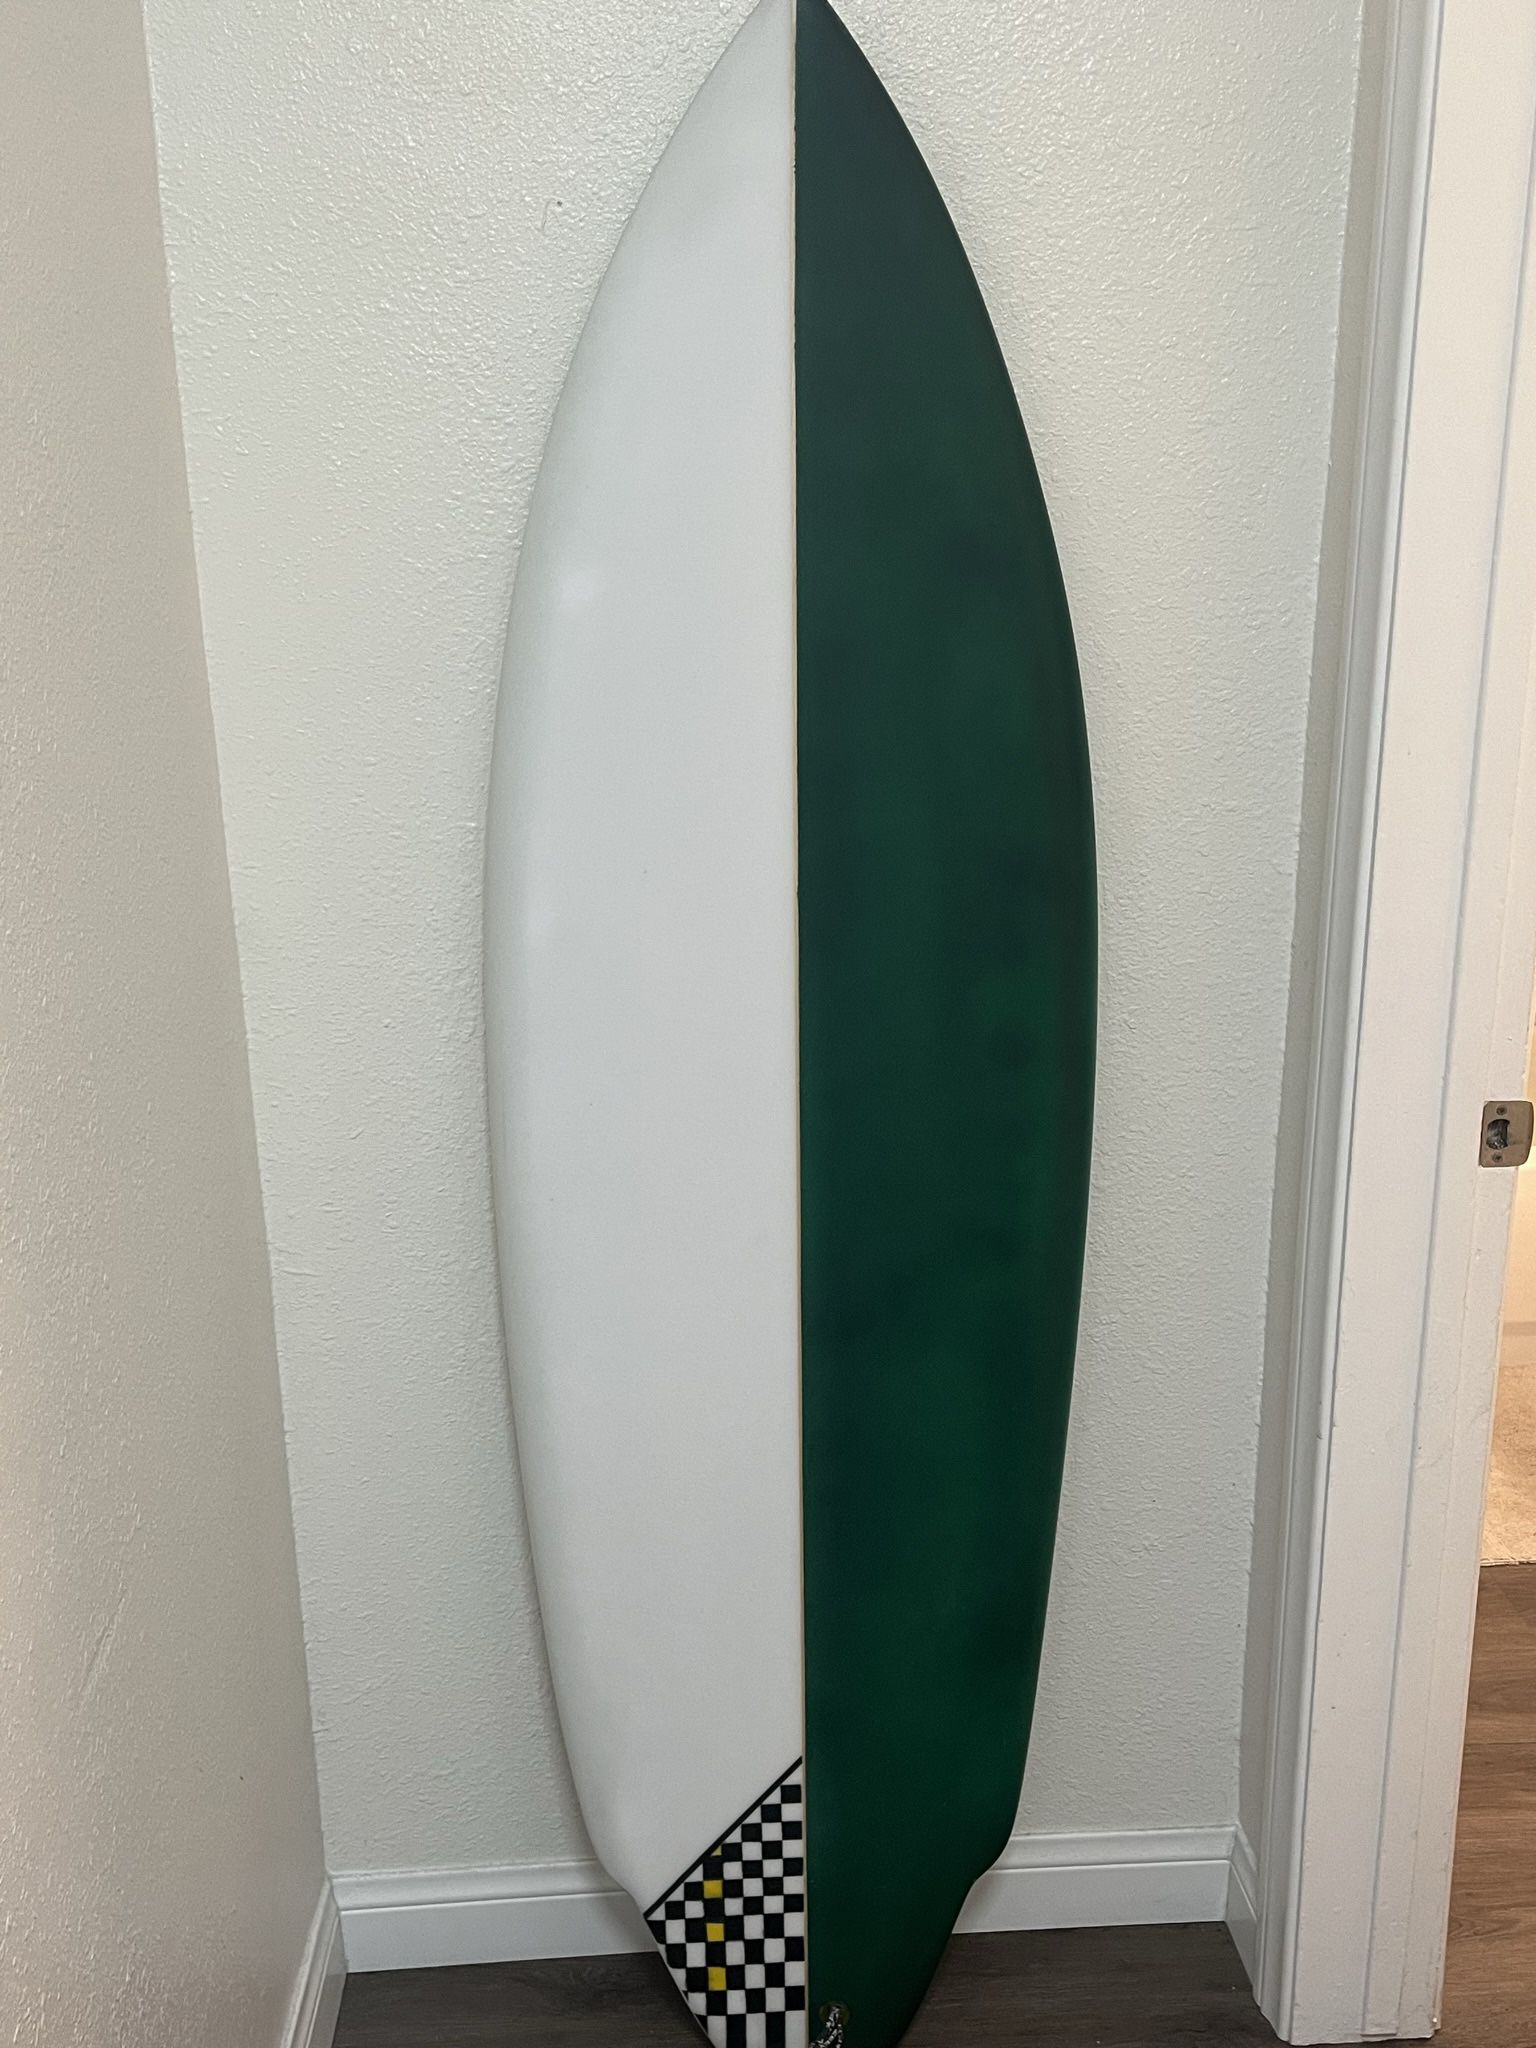 5’11 Thruster Surfboard